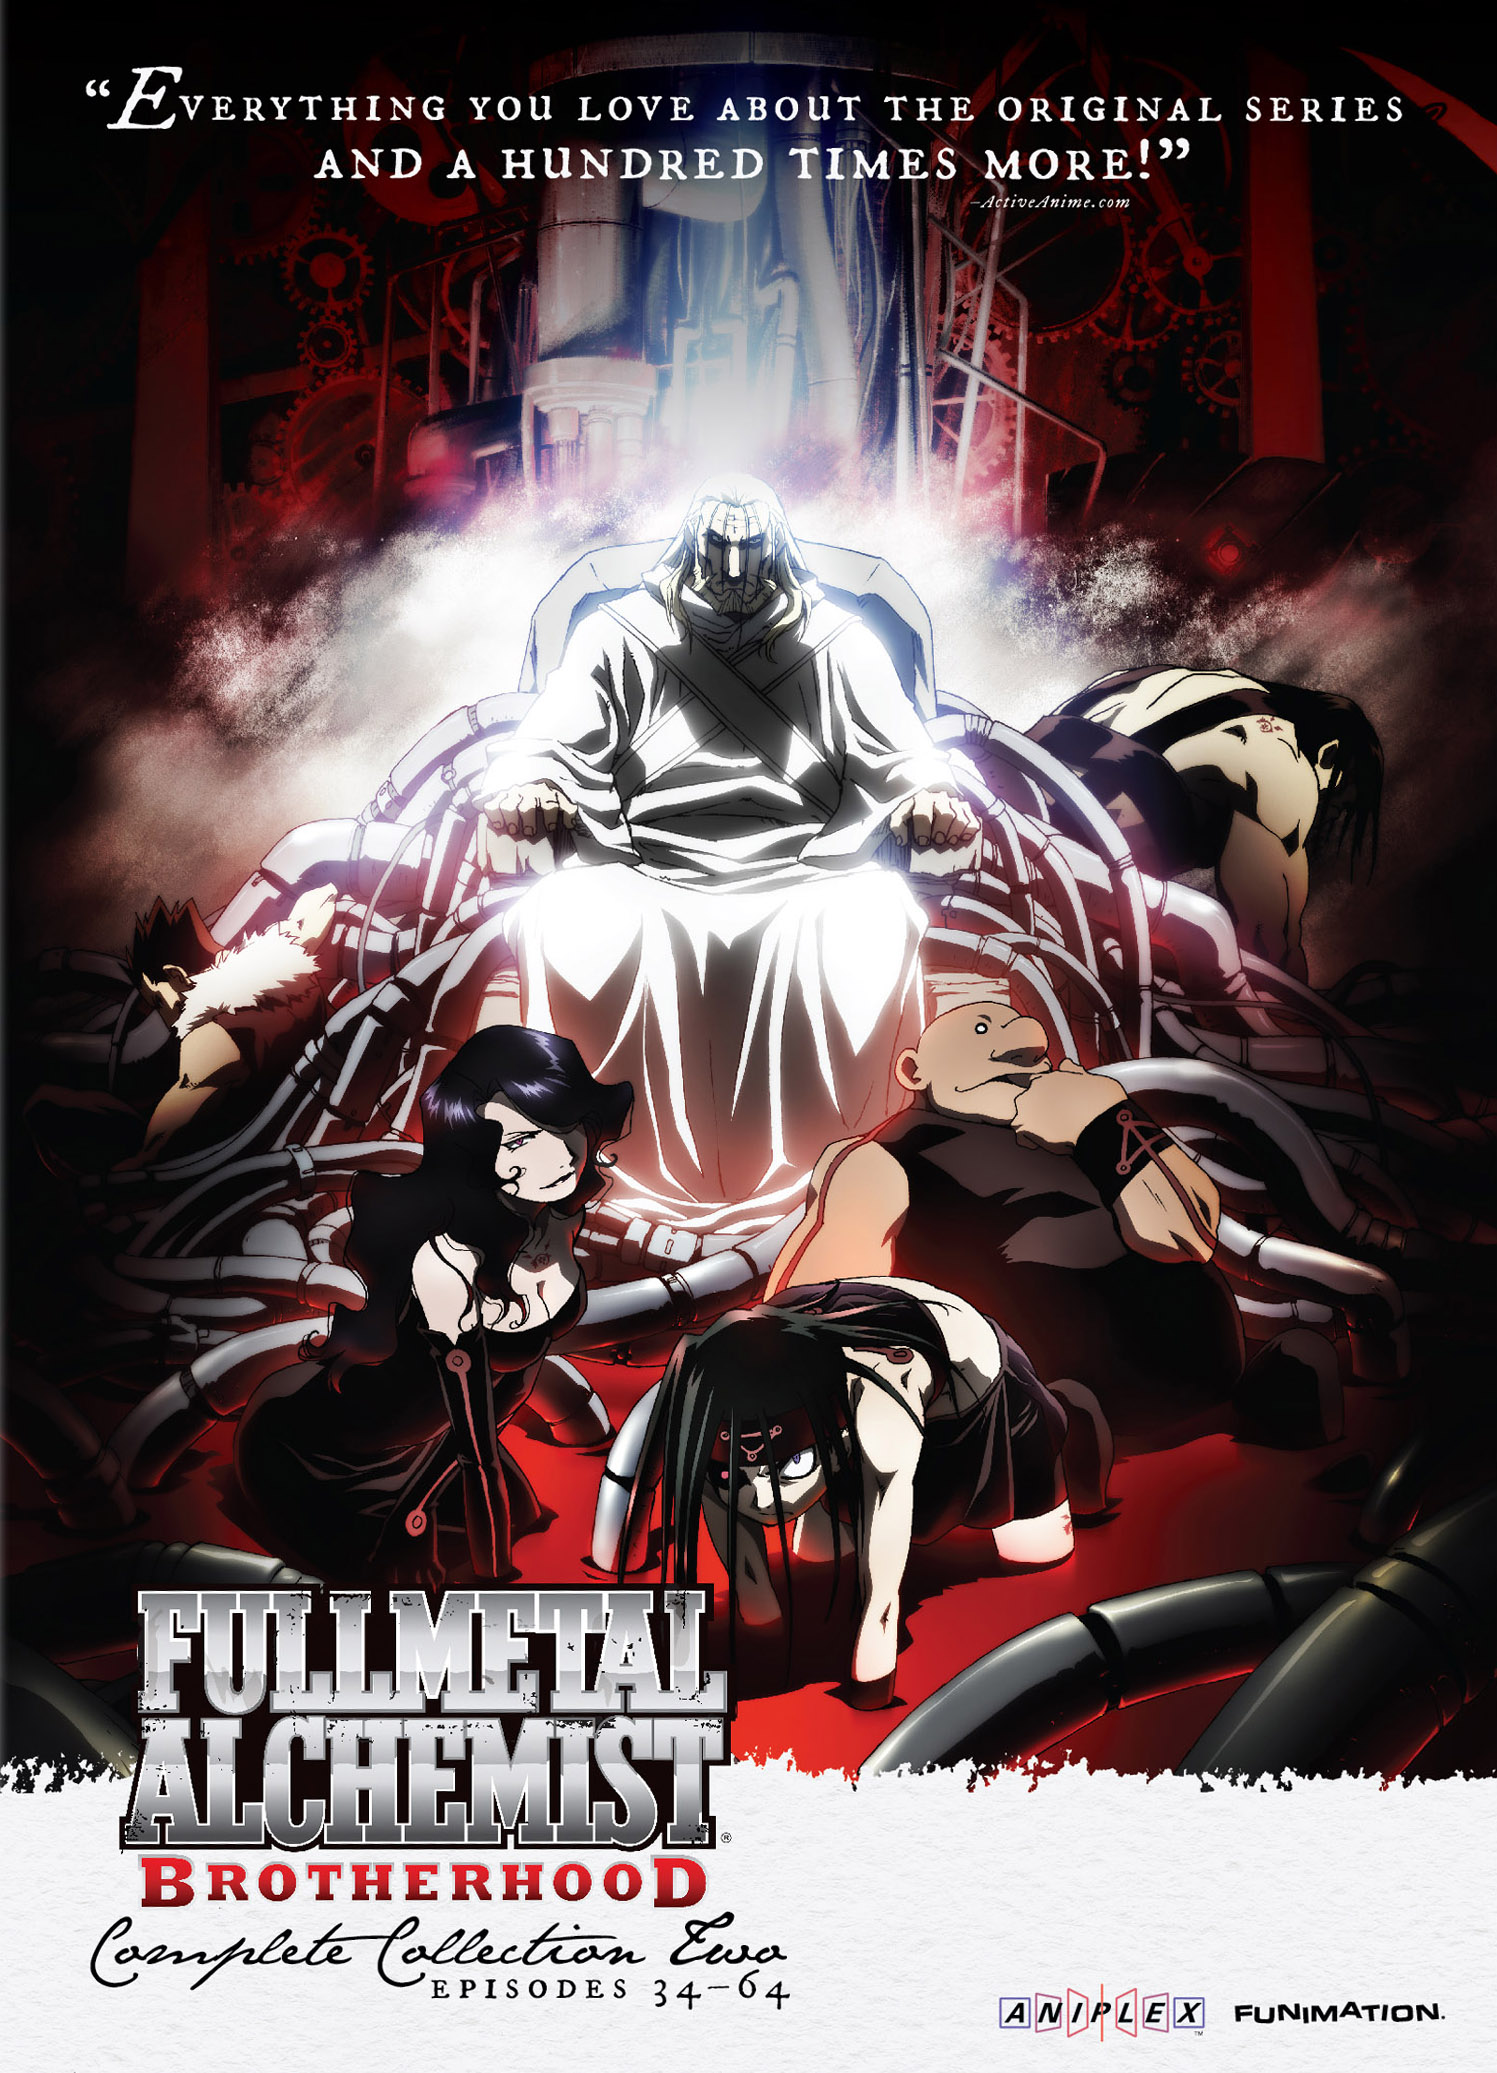 Fullmetal Alchemist: Brotherhood *EMOTIONAL* Episode 4 An